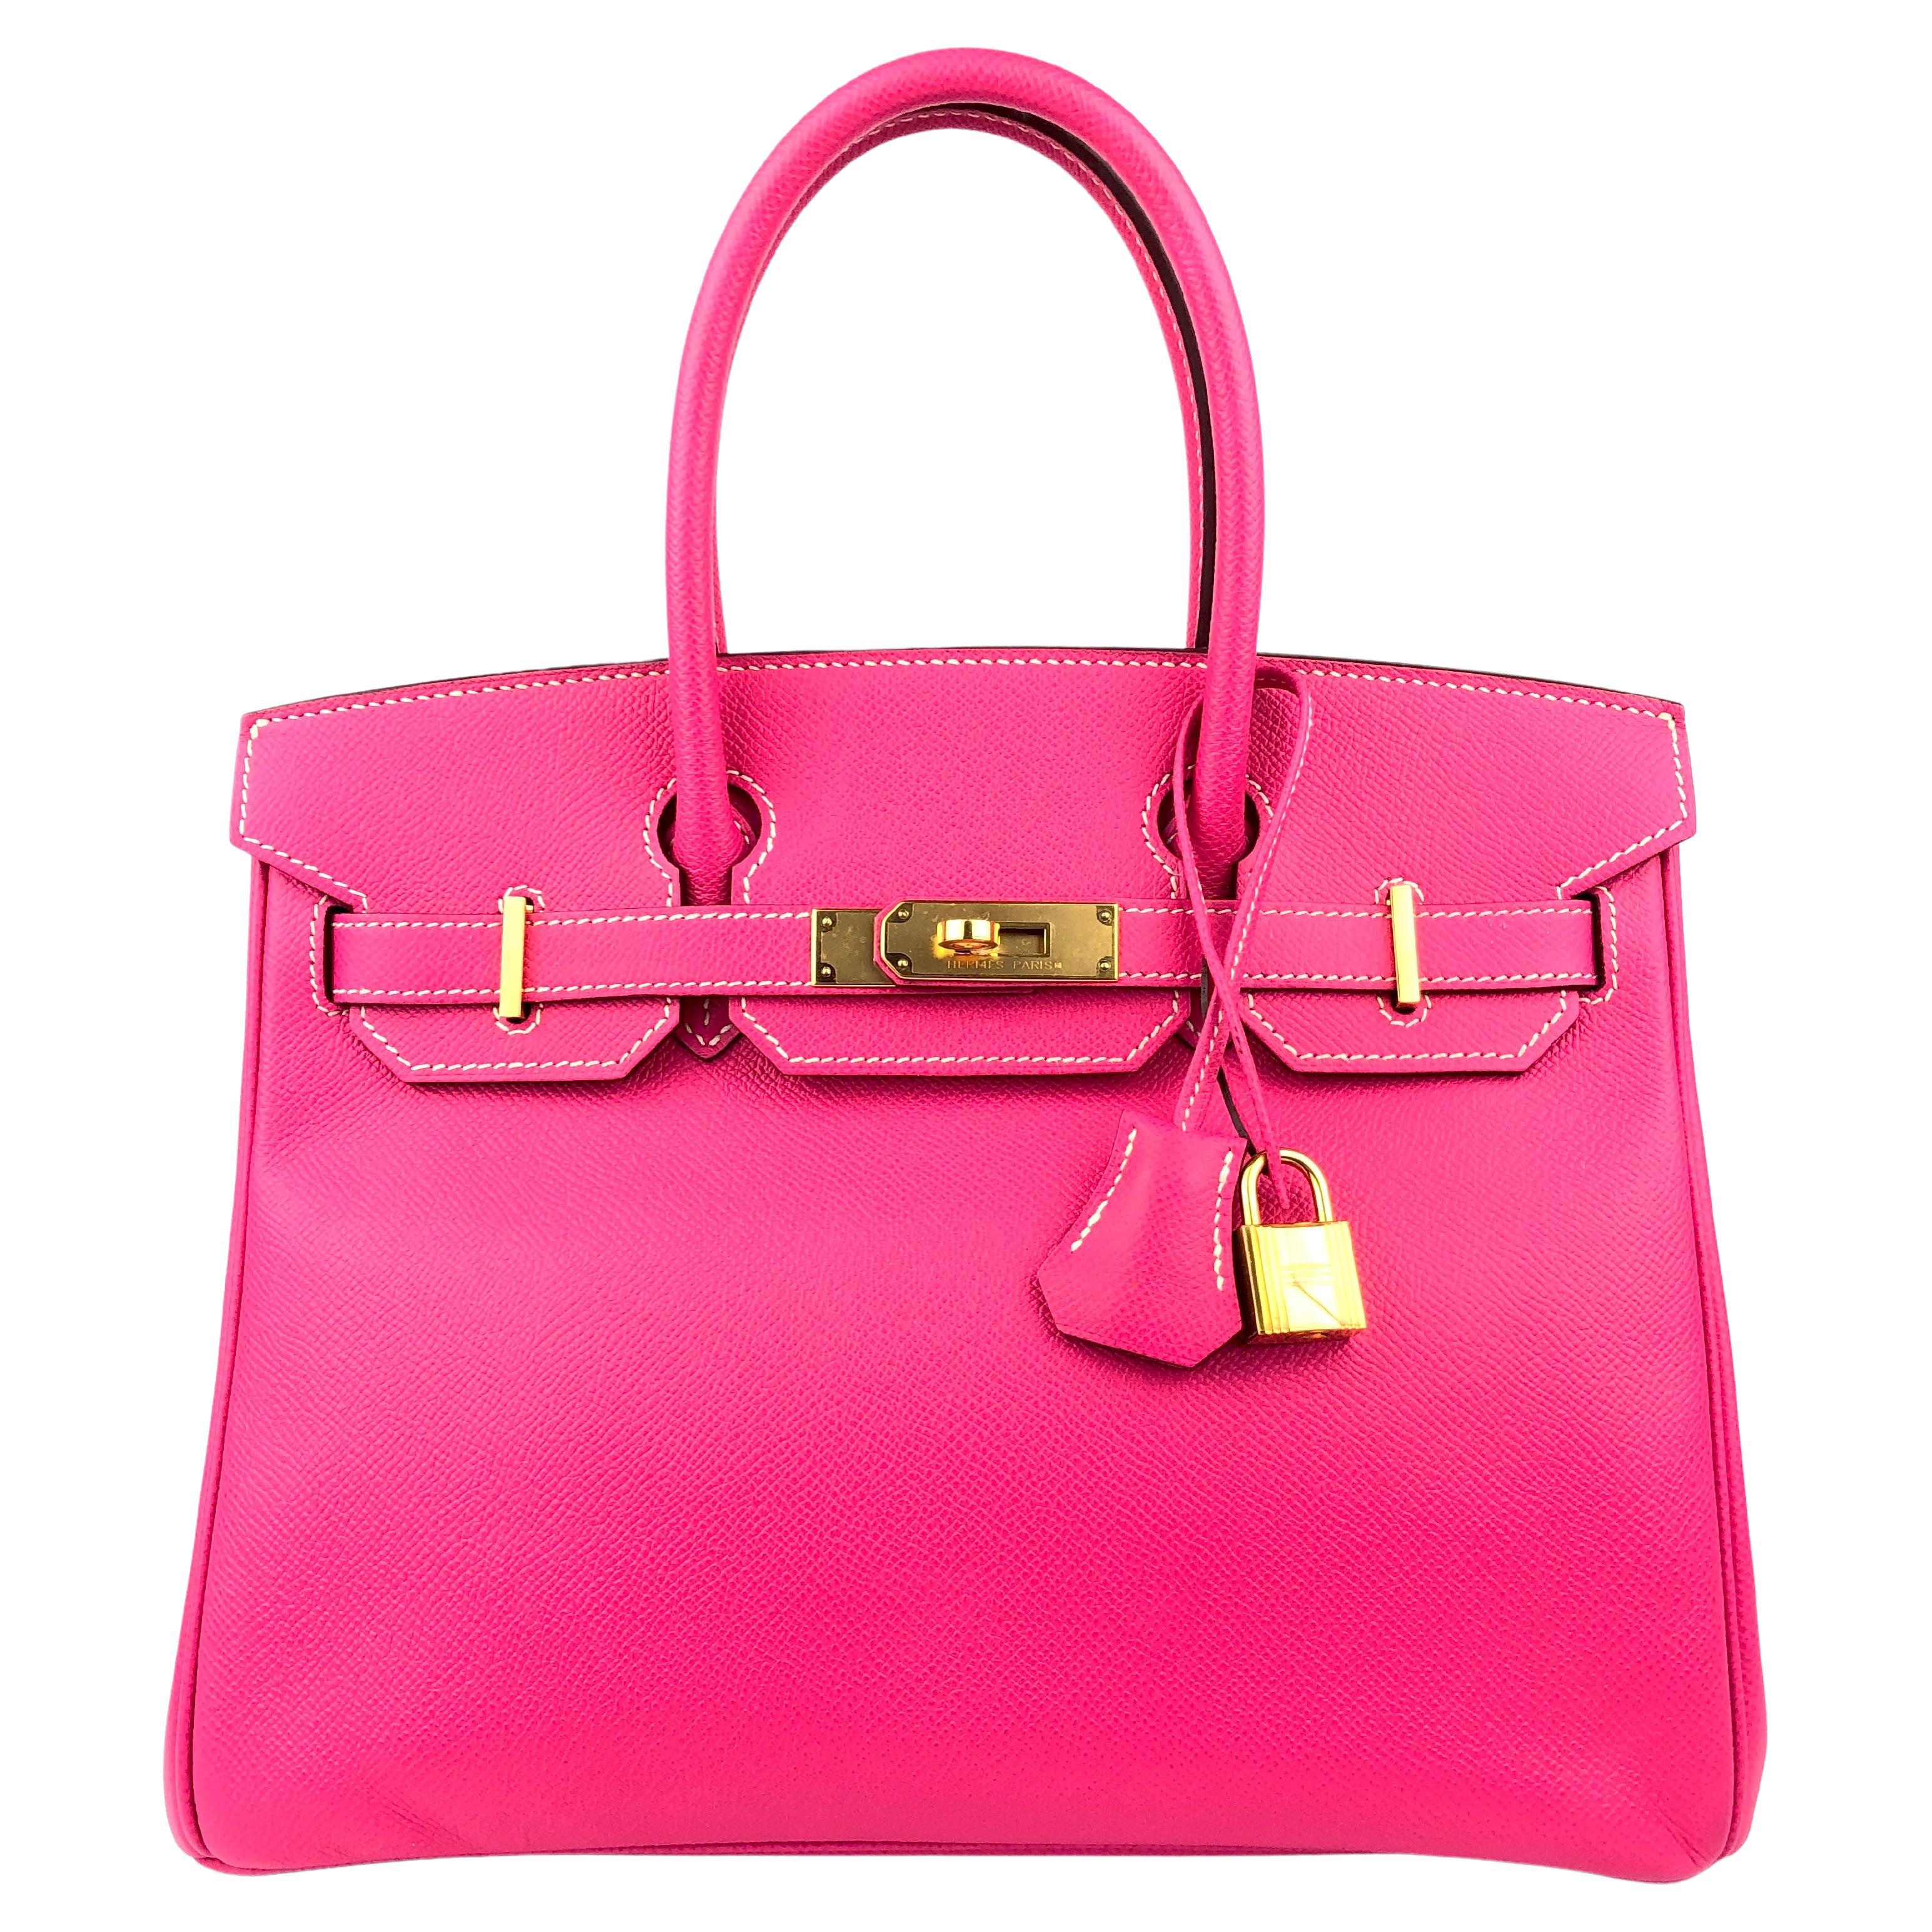 Hermes Birkin 30 Rose Tyrien Pink Epsom Leather Gold Hardware Handbag